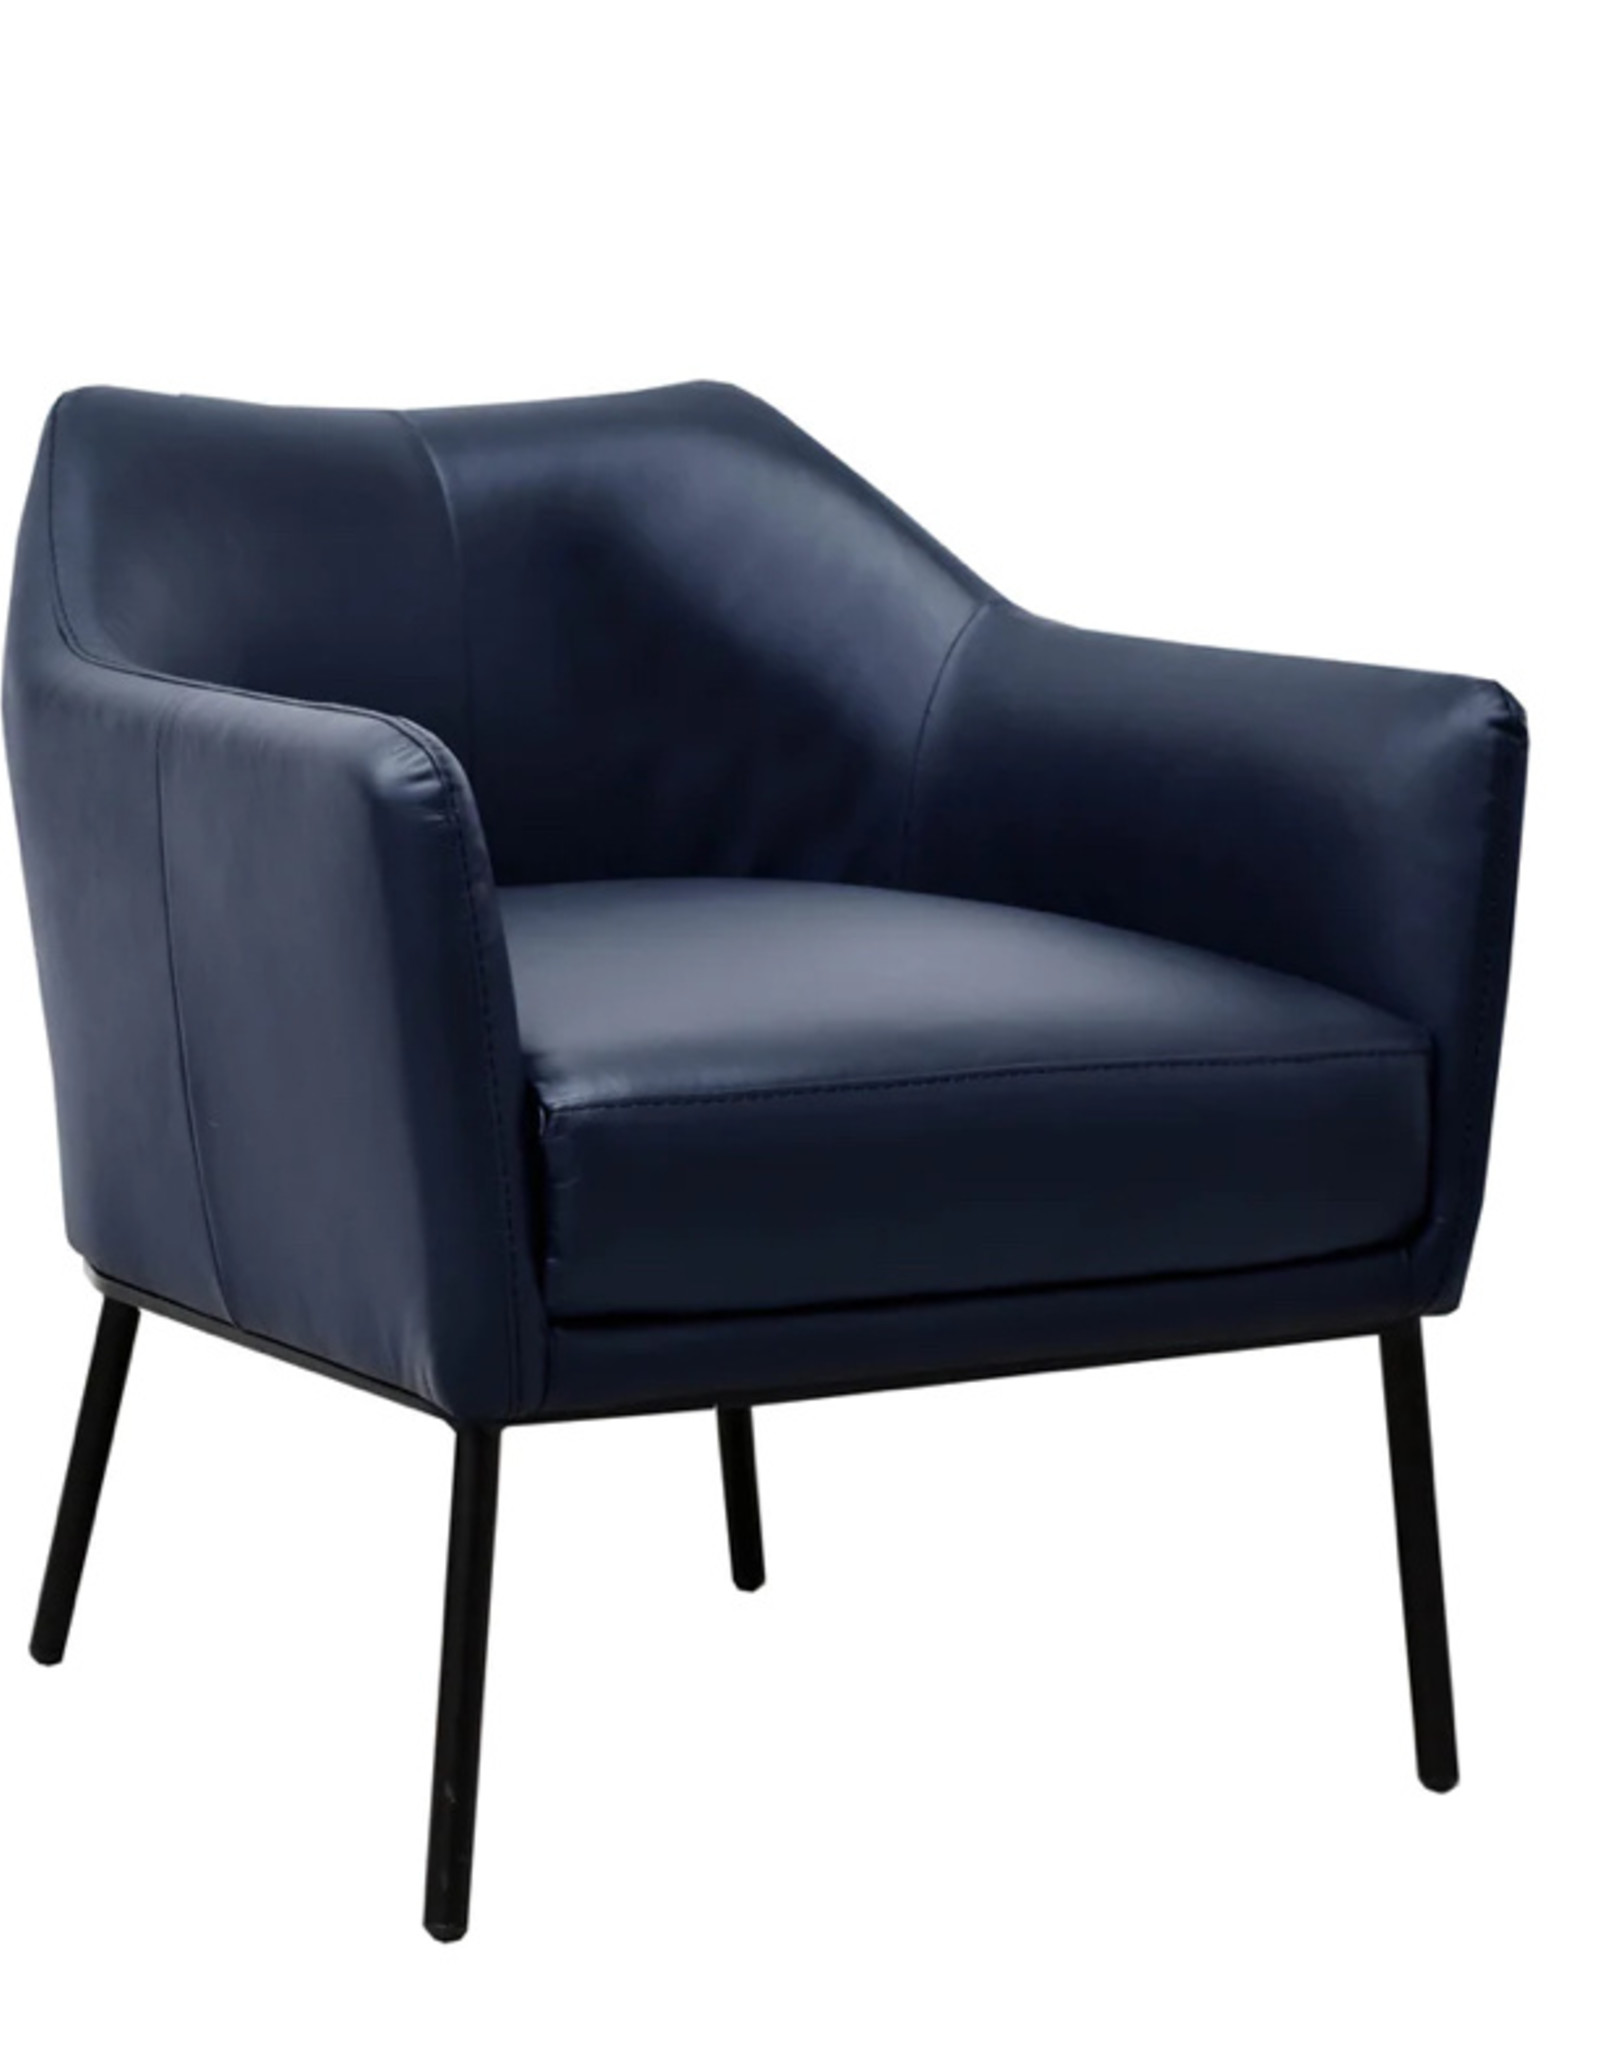 LH Imports LH Clark Leather Club Chair Blue Ink DAV009-B